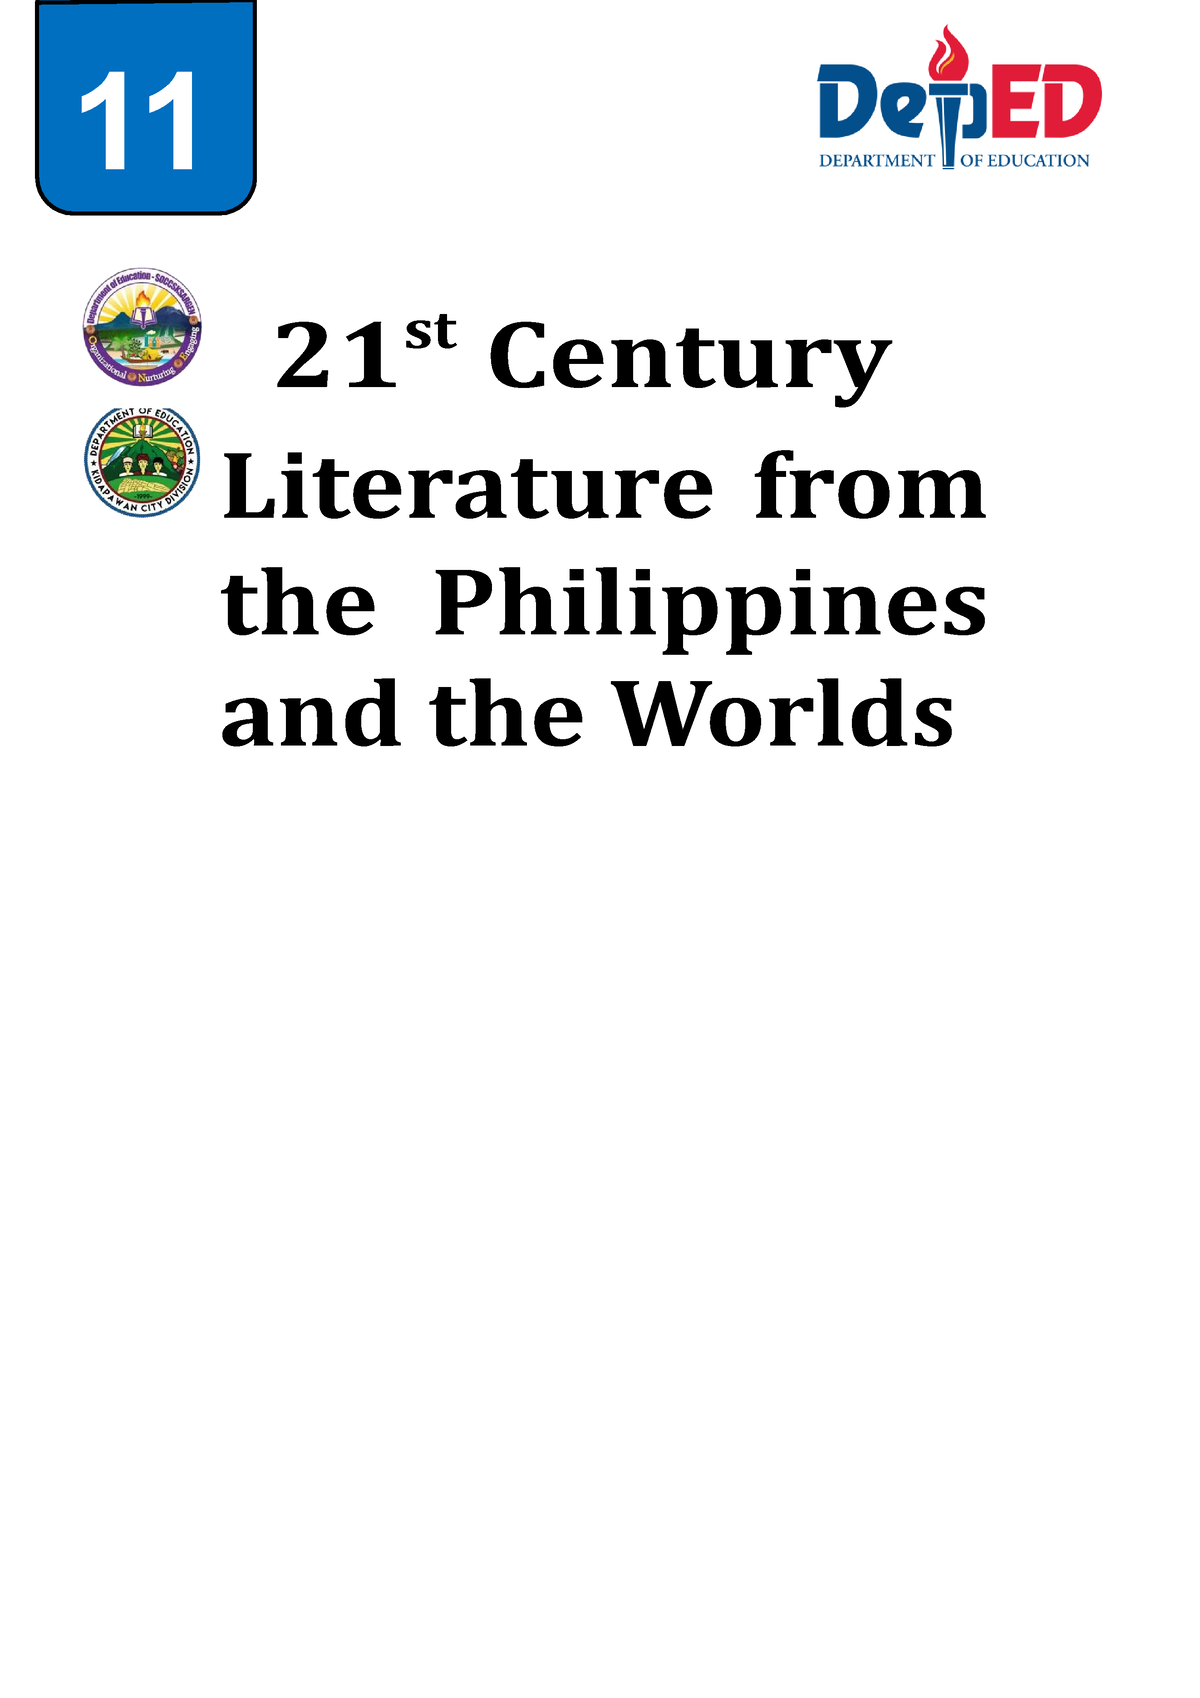 21st century literature q2 module 3 - 11 21 st Century Literature from ...